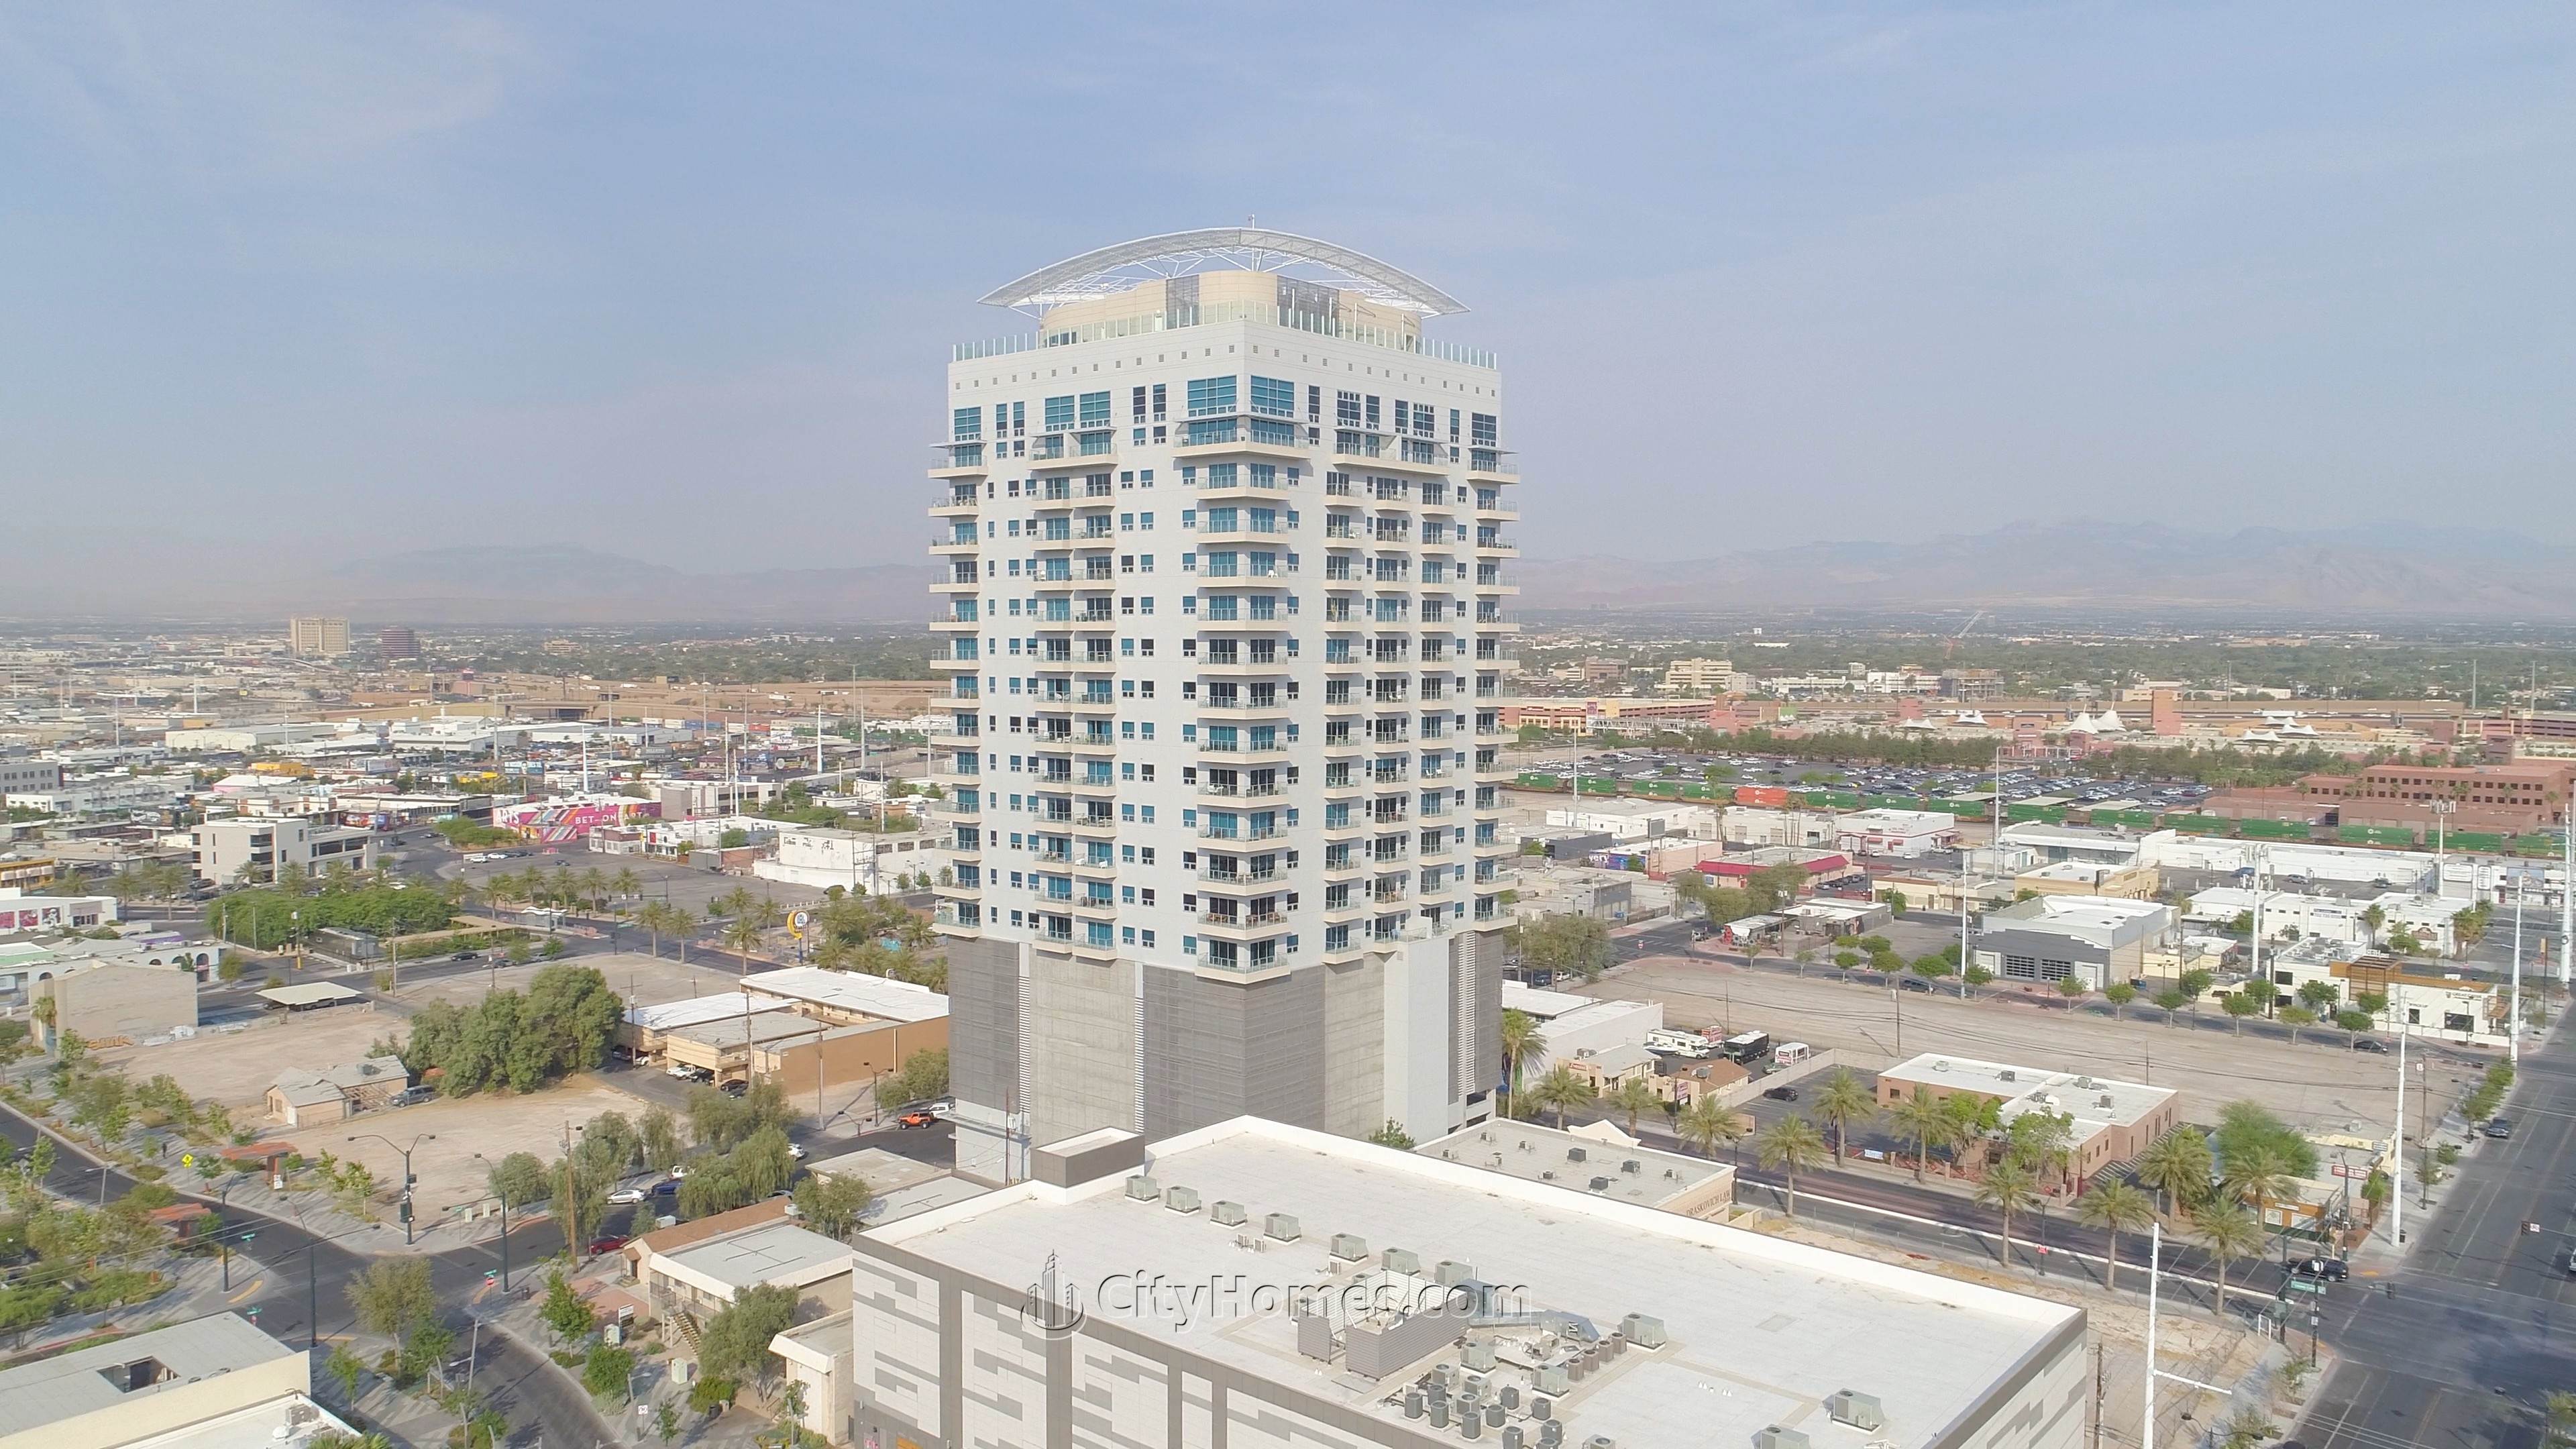 3. Newport Lofts building at 200 Hoover Ave, Las Vegas, NV 89101